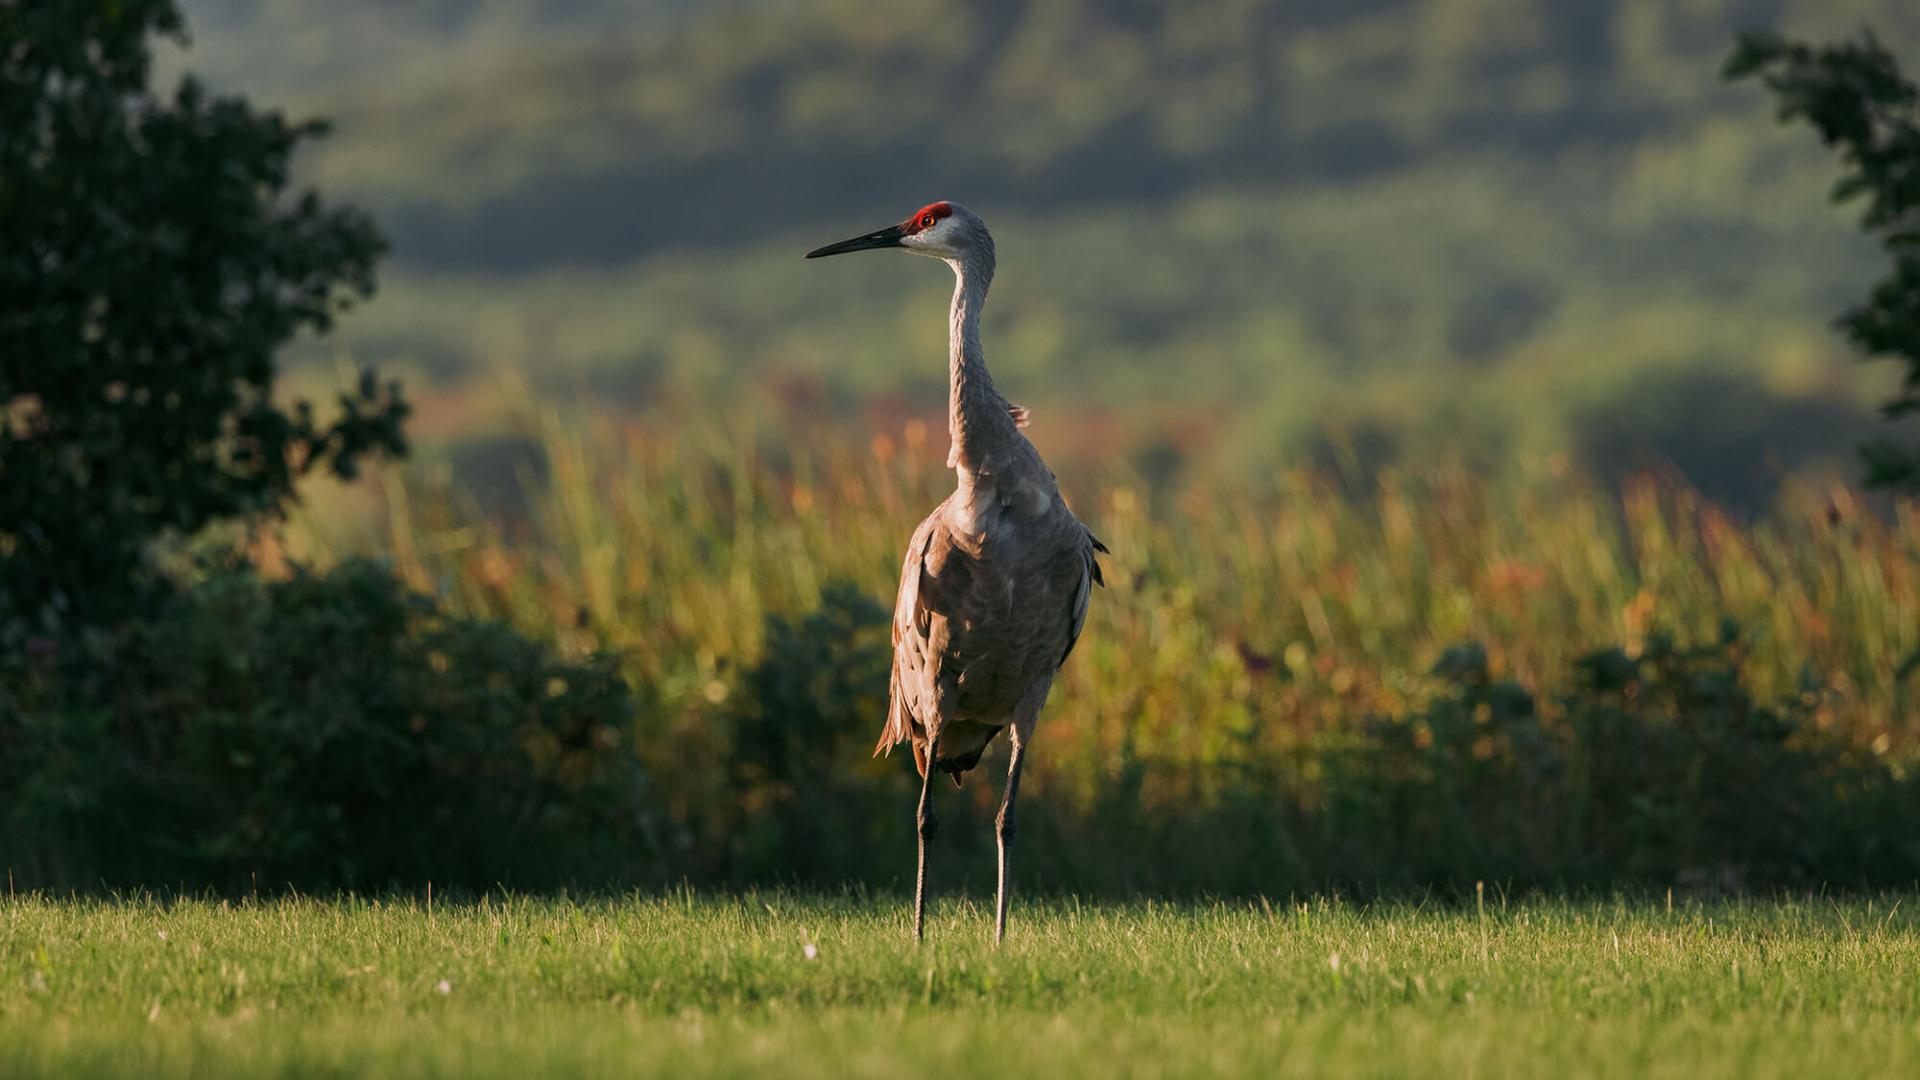 sandhill crane standing in a grassy field